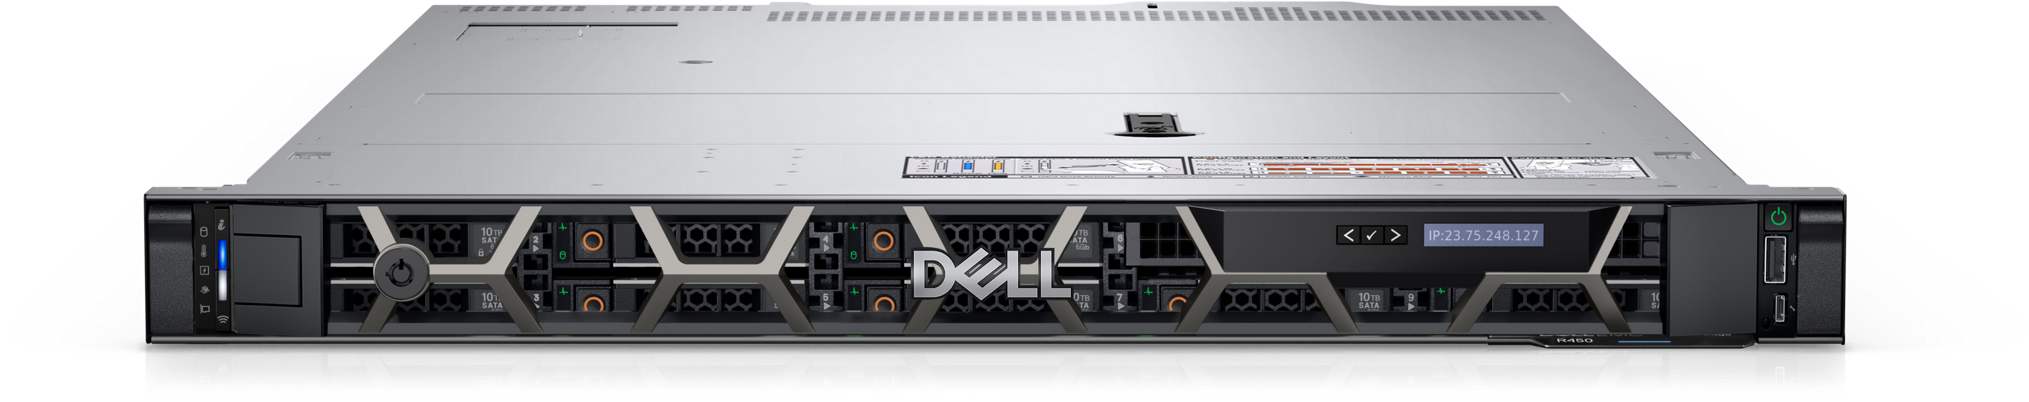 Poweredge R450 Rack Server Dell Usa